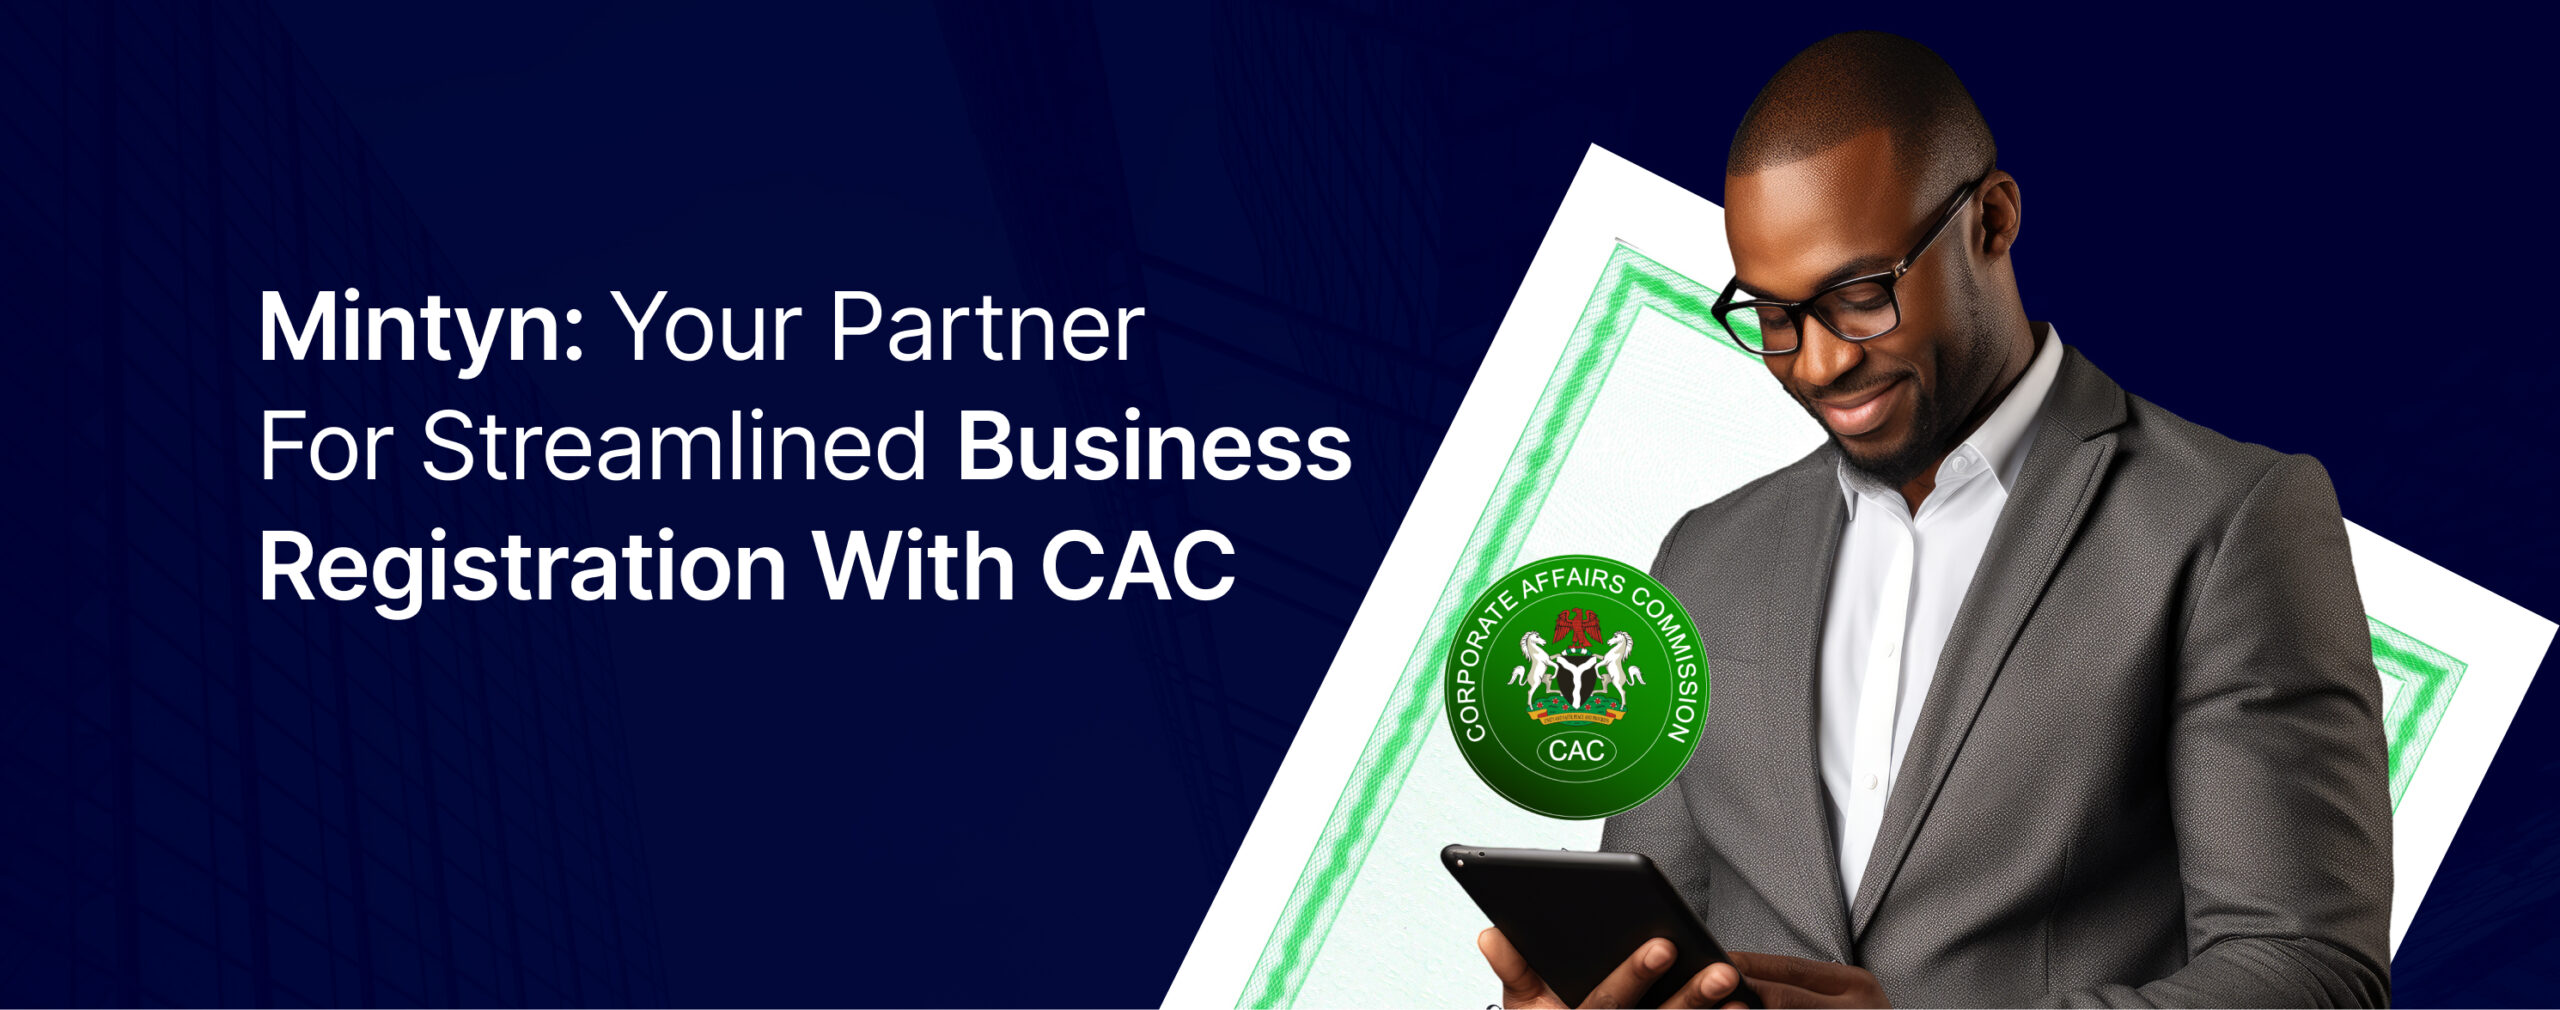 CAC registration